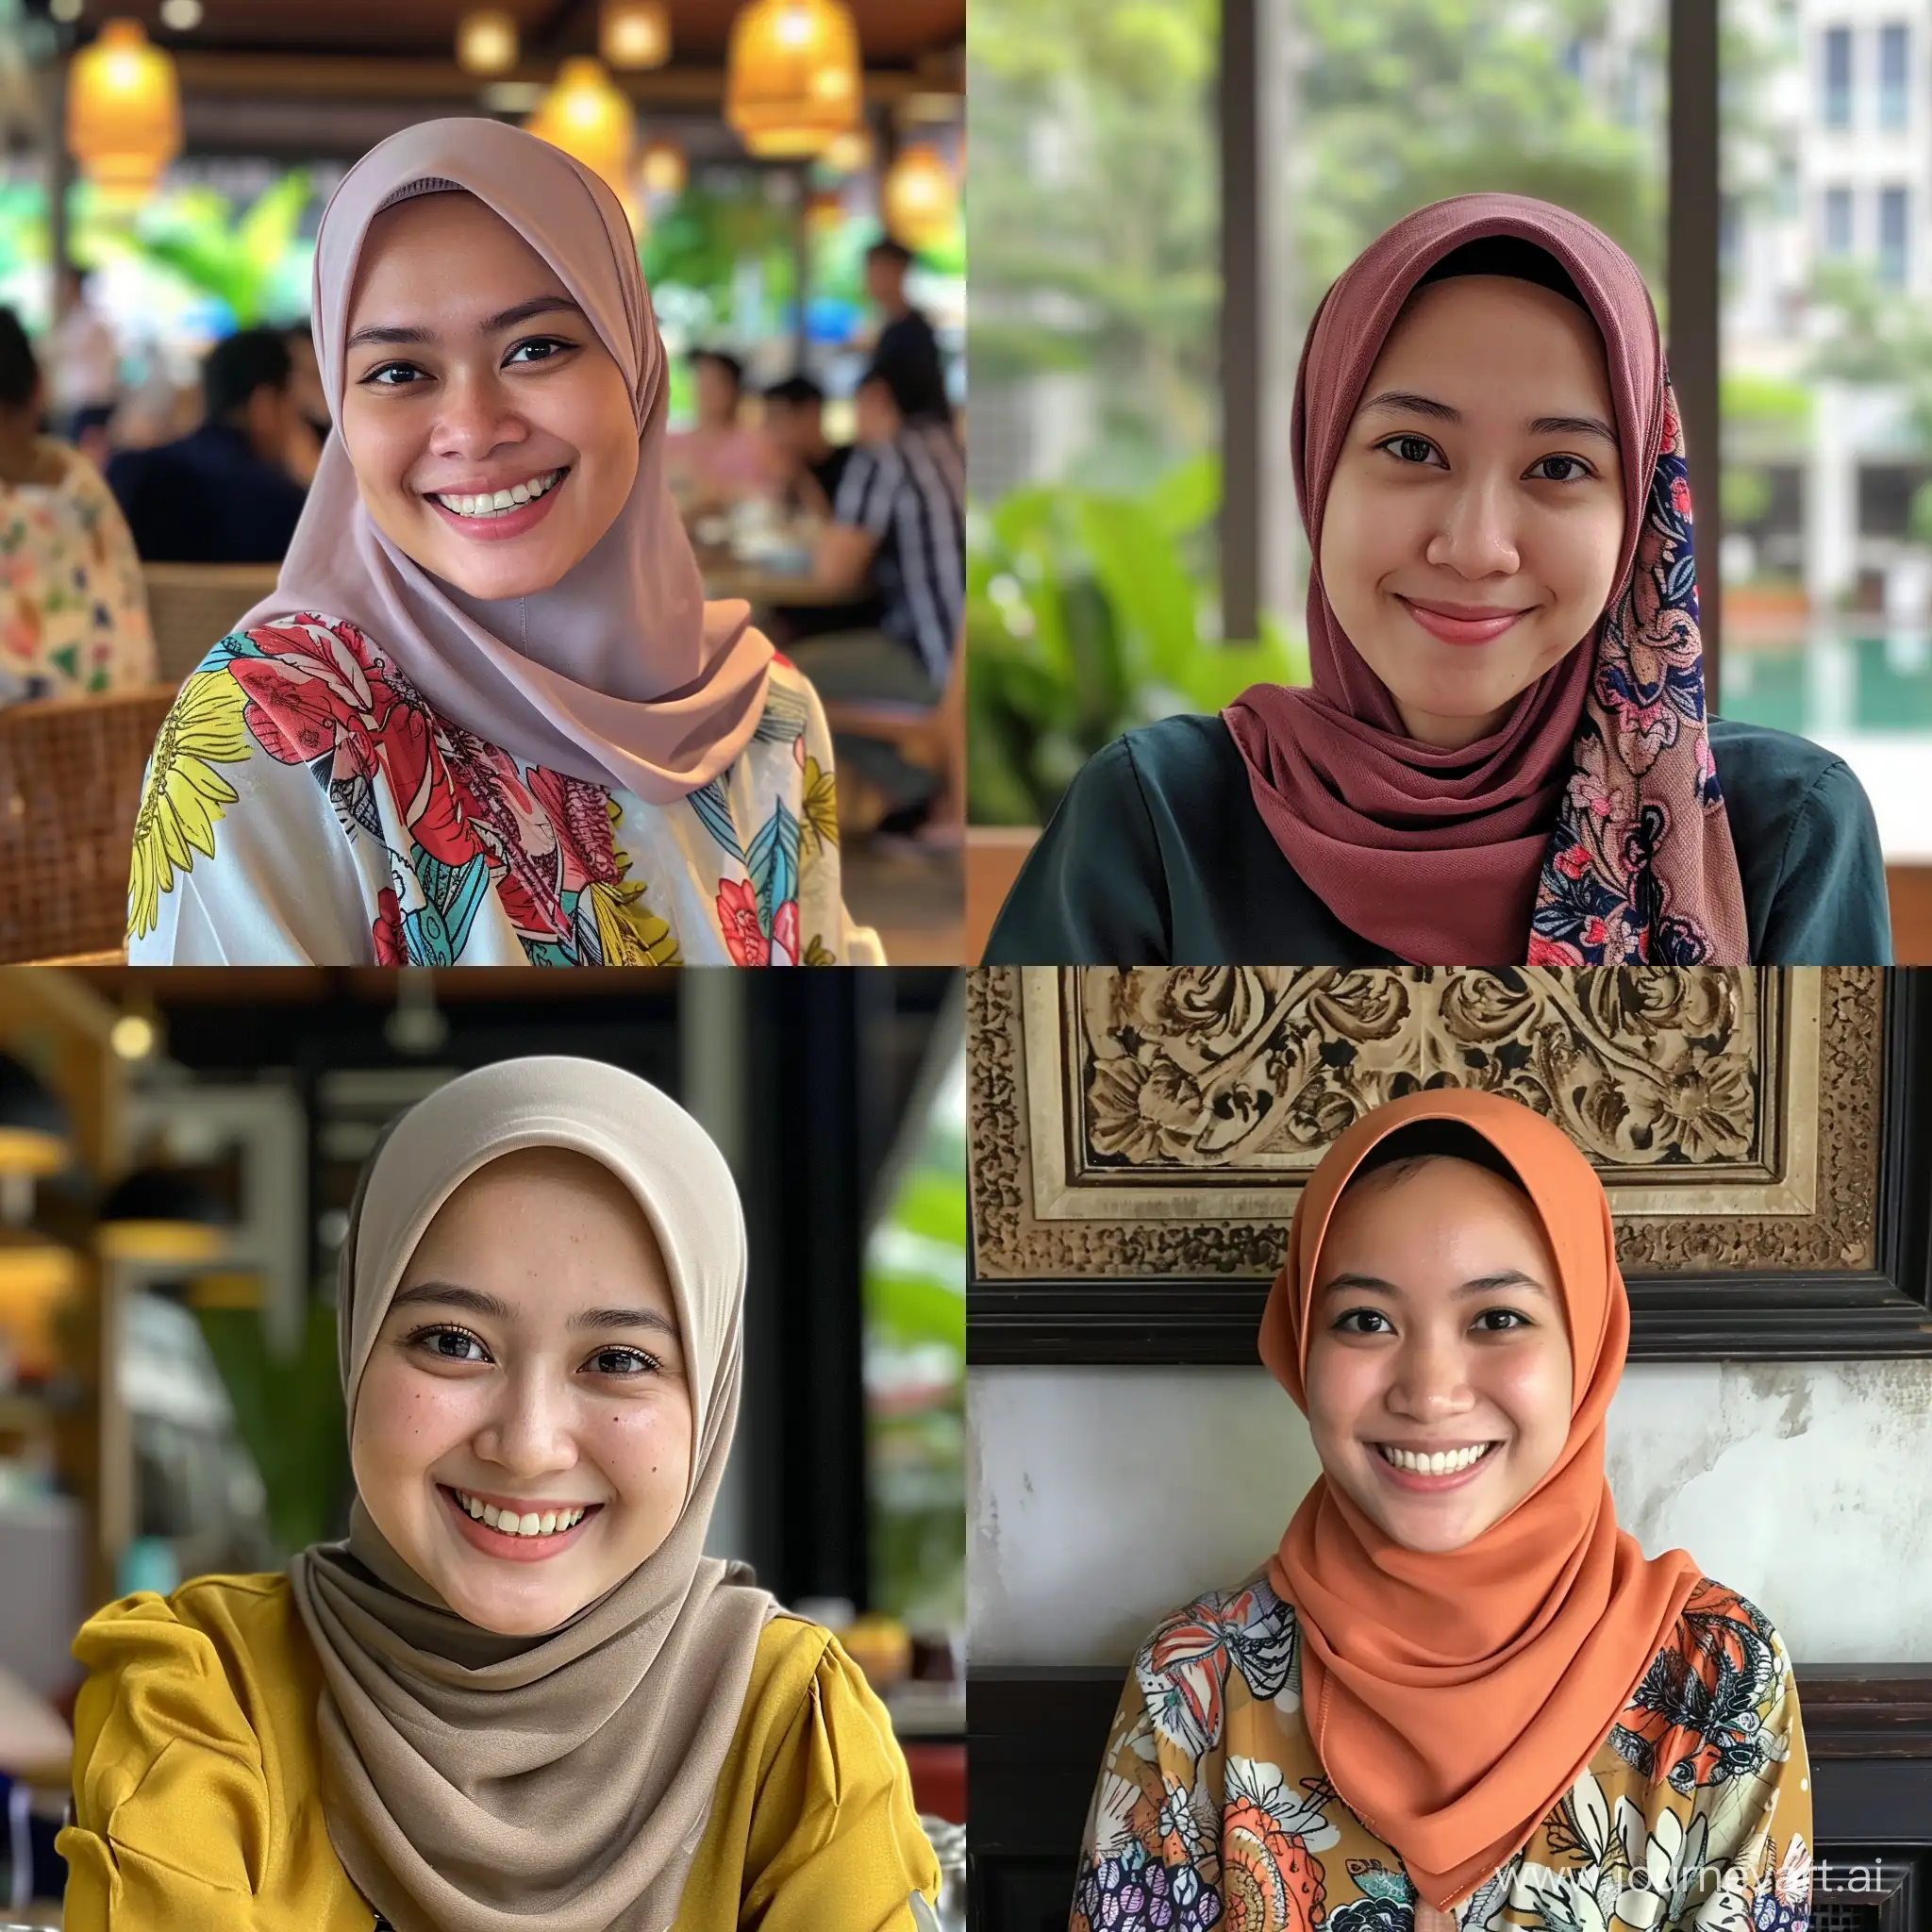 Joyful-22YearOld-Malay-Woman-Captured-in-a-Radiant-Smile